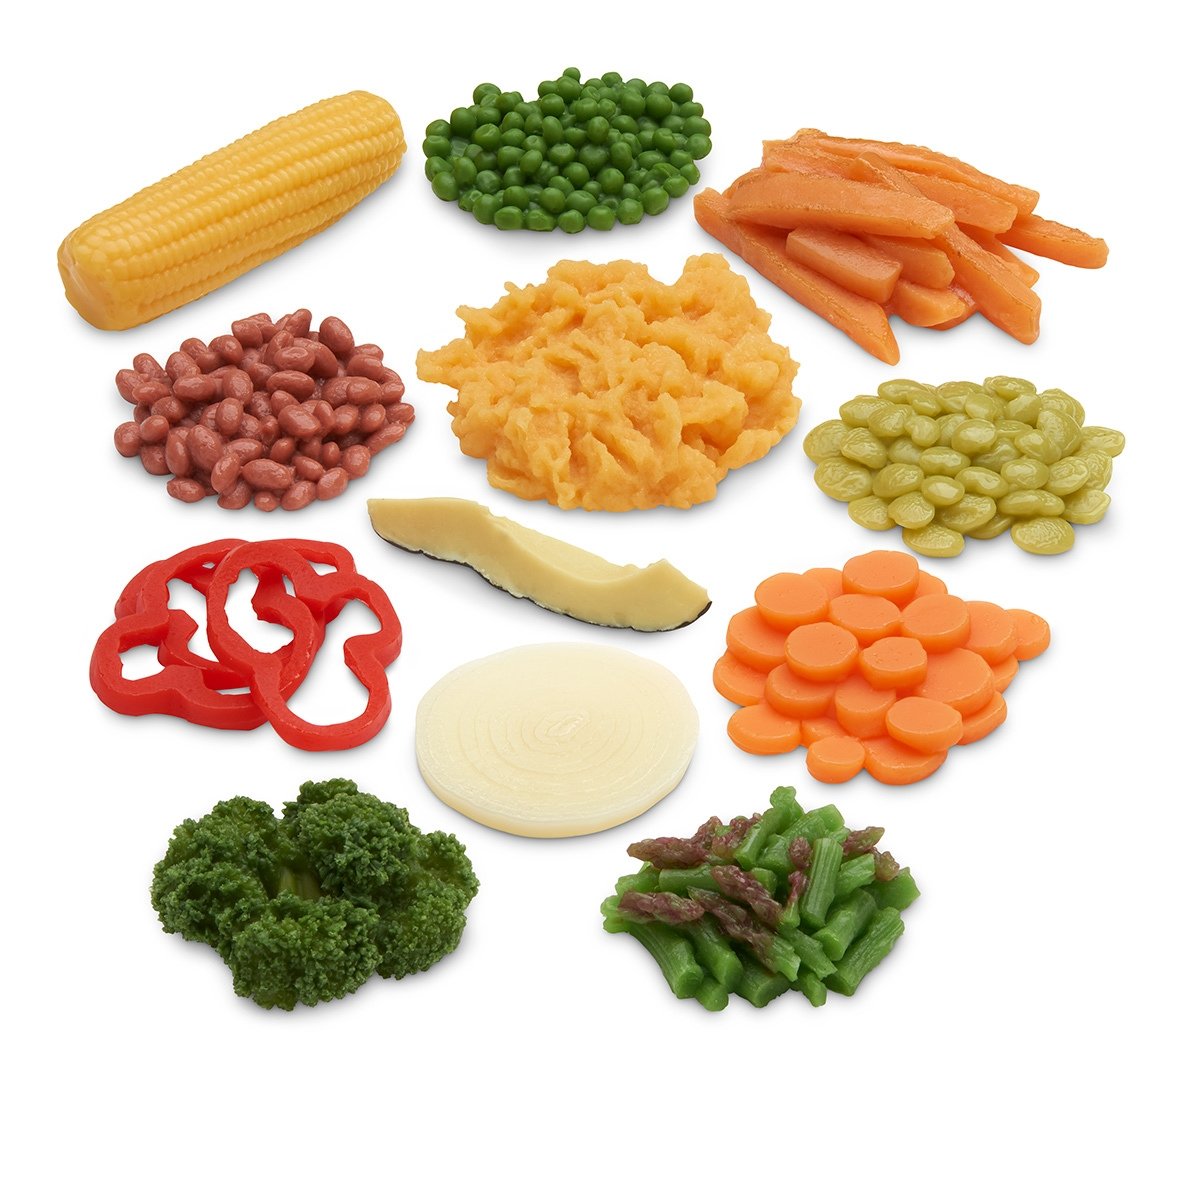 Nasco Life/form Complete MyPlate Food Replica Kit